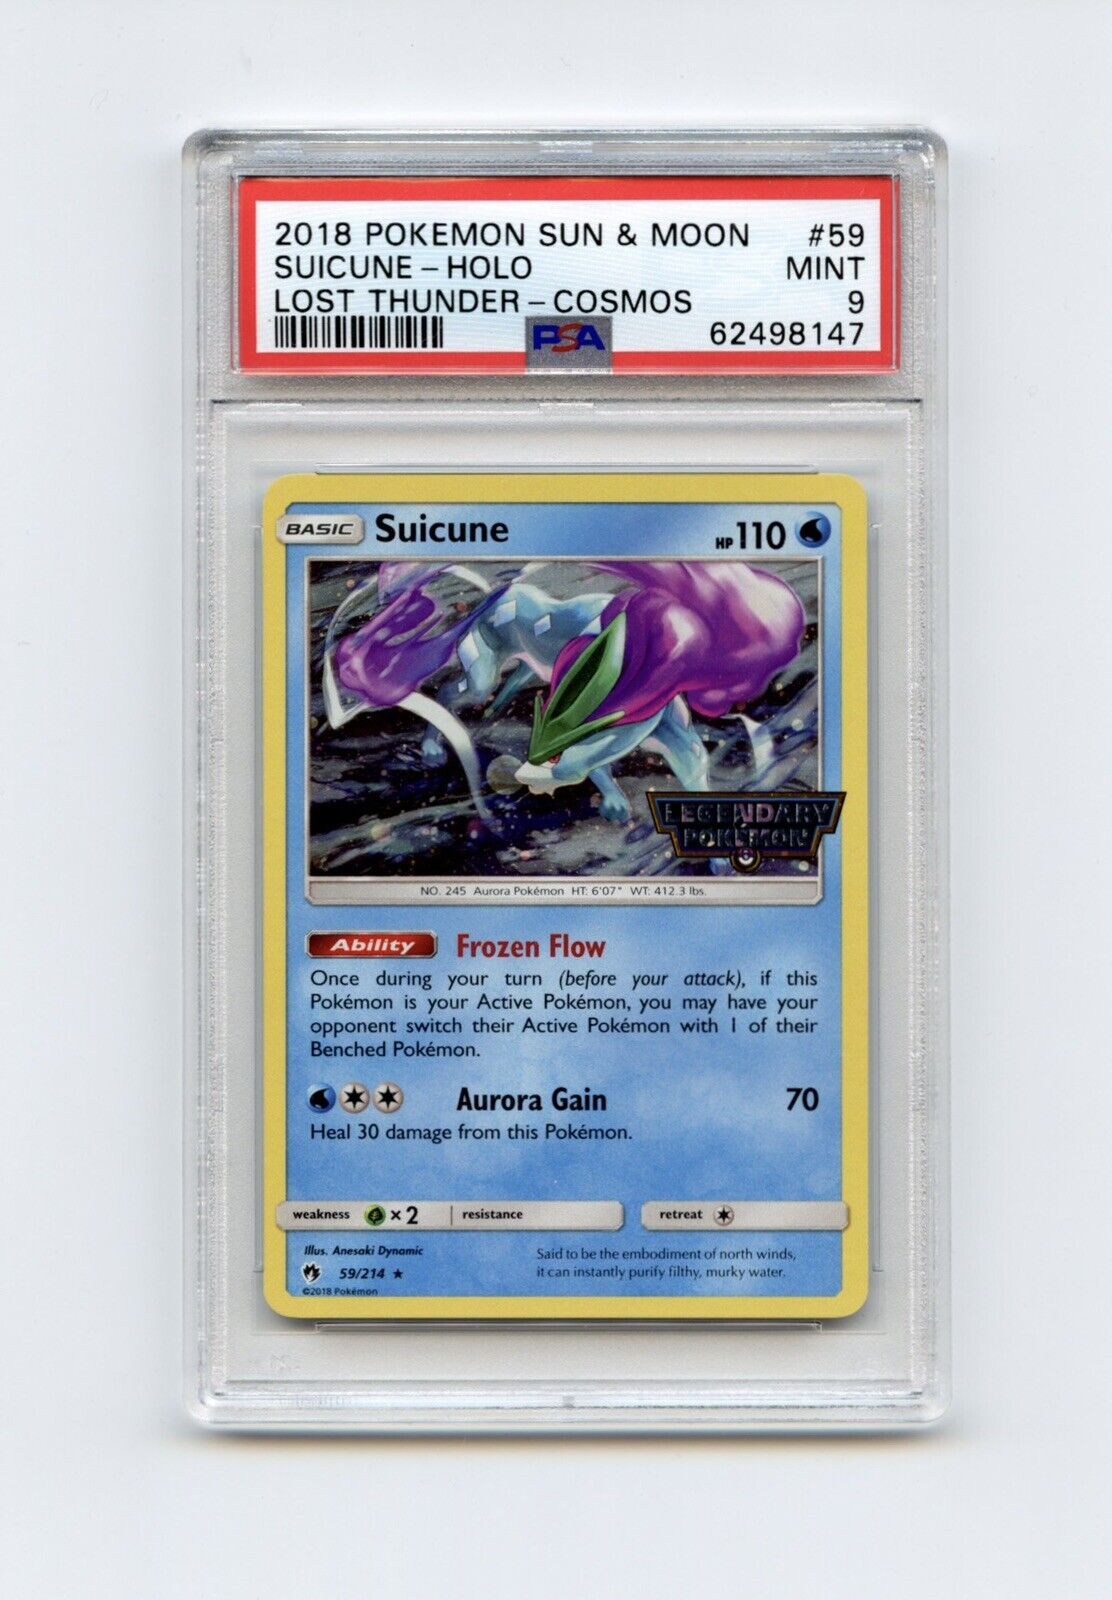 Pokémon Card Suicune Holo - Lost Thunder Cosmos Legendary Pokémon Stamp PSA 9